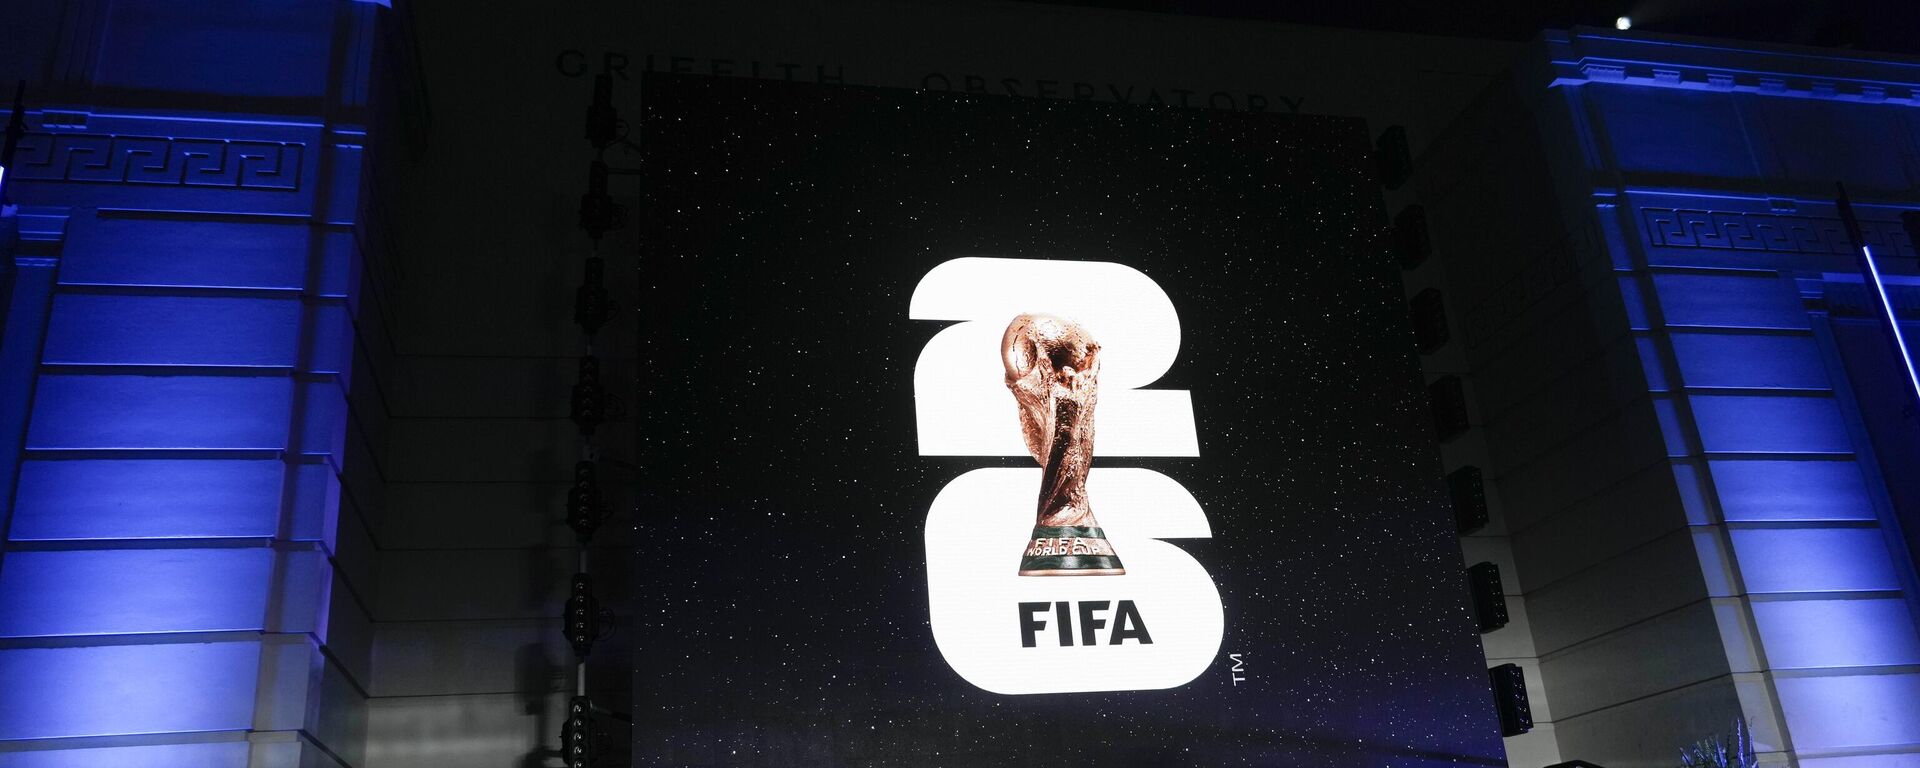 Презентация логотипа Чемпионата мира по футболу 2026 года на экране возле обсерватории Гриффита в Лос-Анджелесе в среду, 17 мая 2023 года. - Sputnik Ўзбекистон, 1920, 18.05.2023